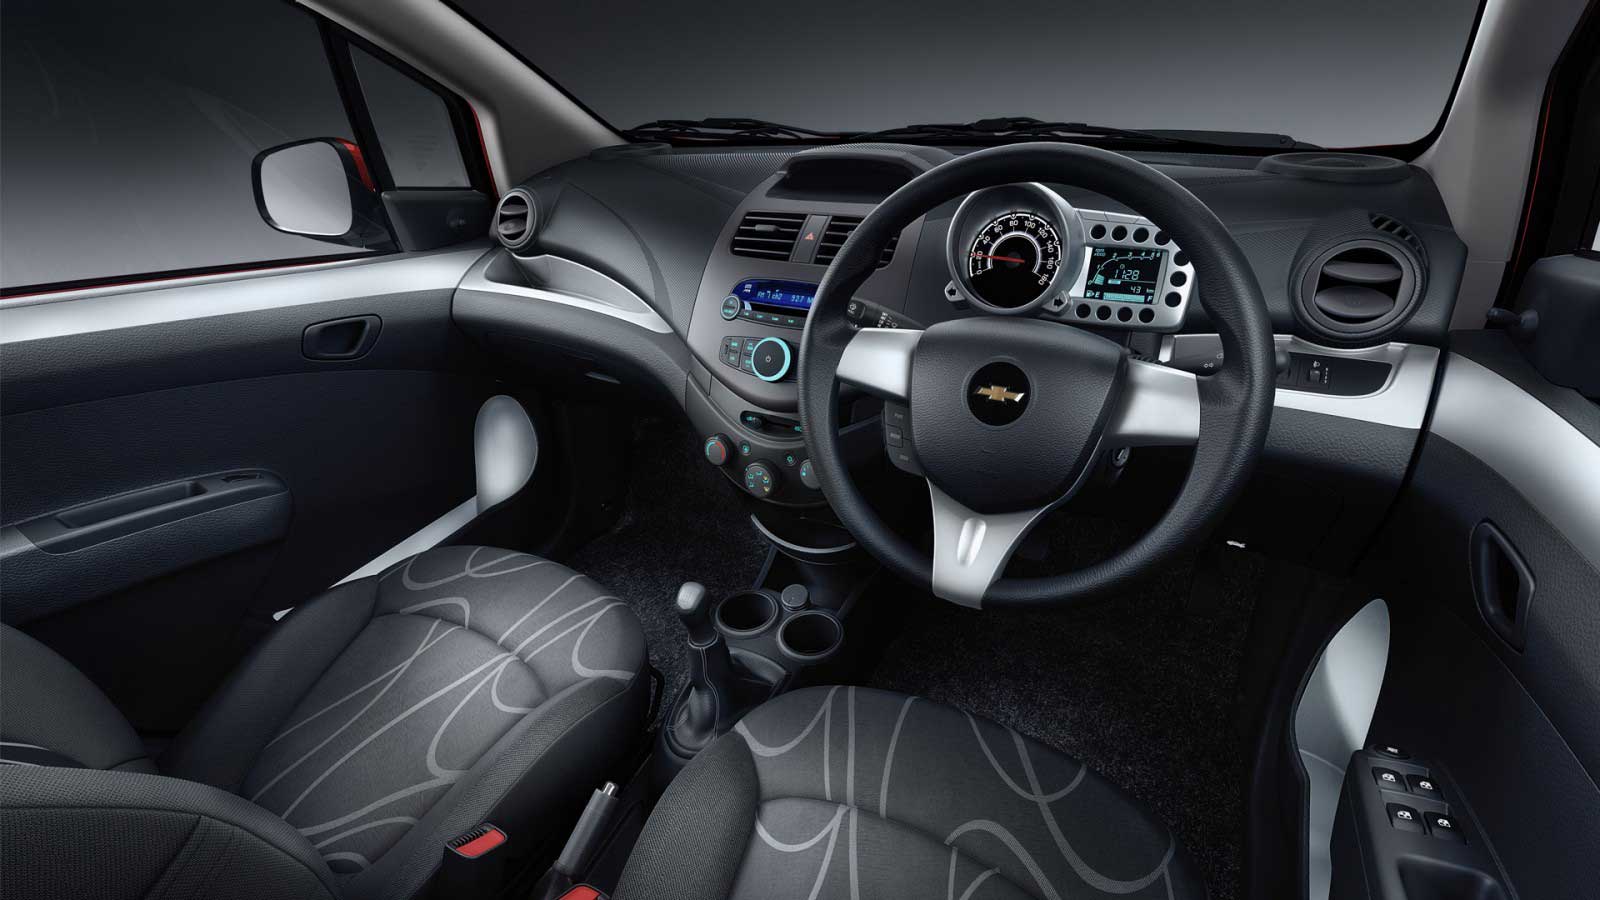 Chevrolet Beat LS Petrol Interior front view